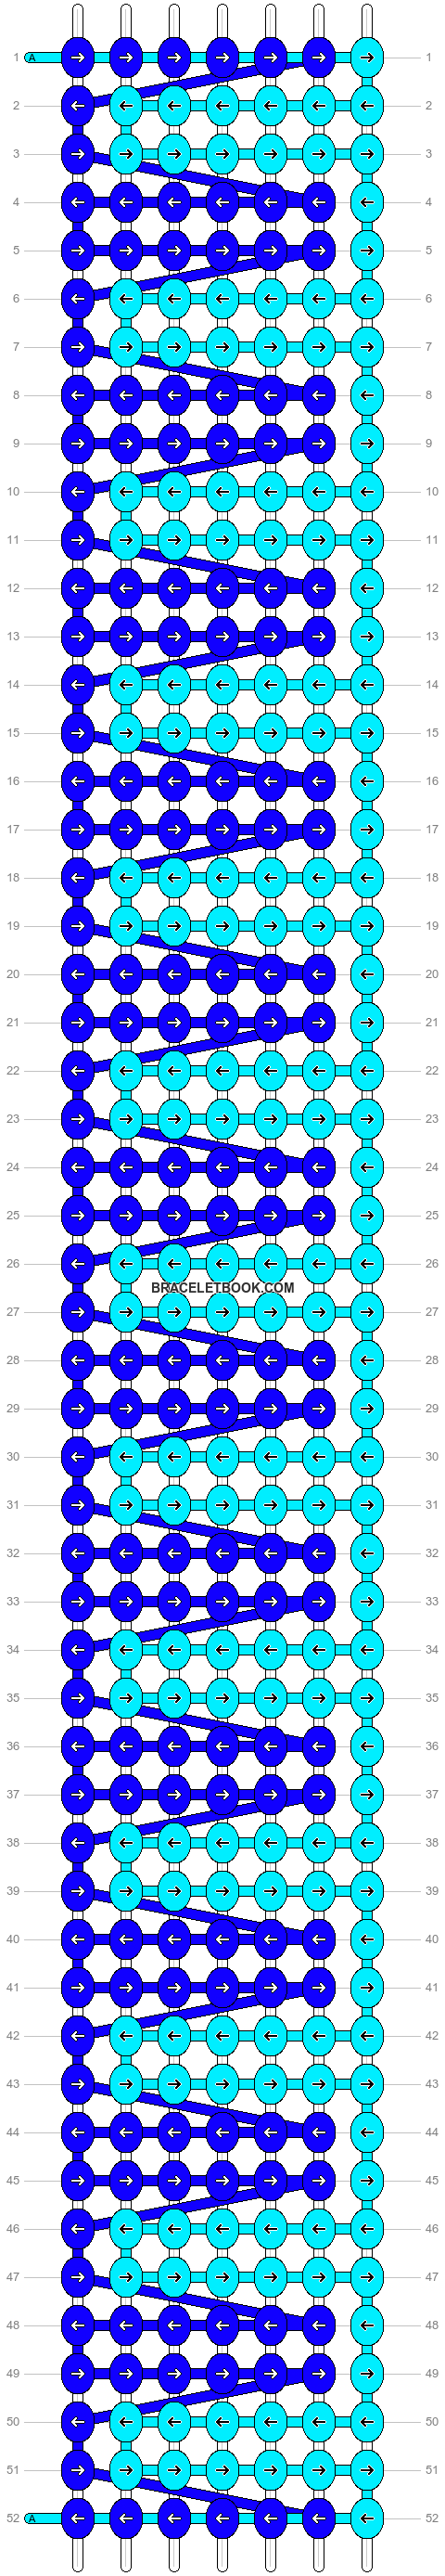 Alpha pattern #15234 variation #7812 pattern